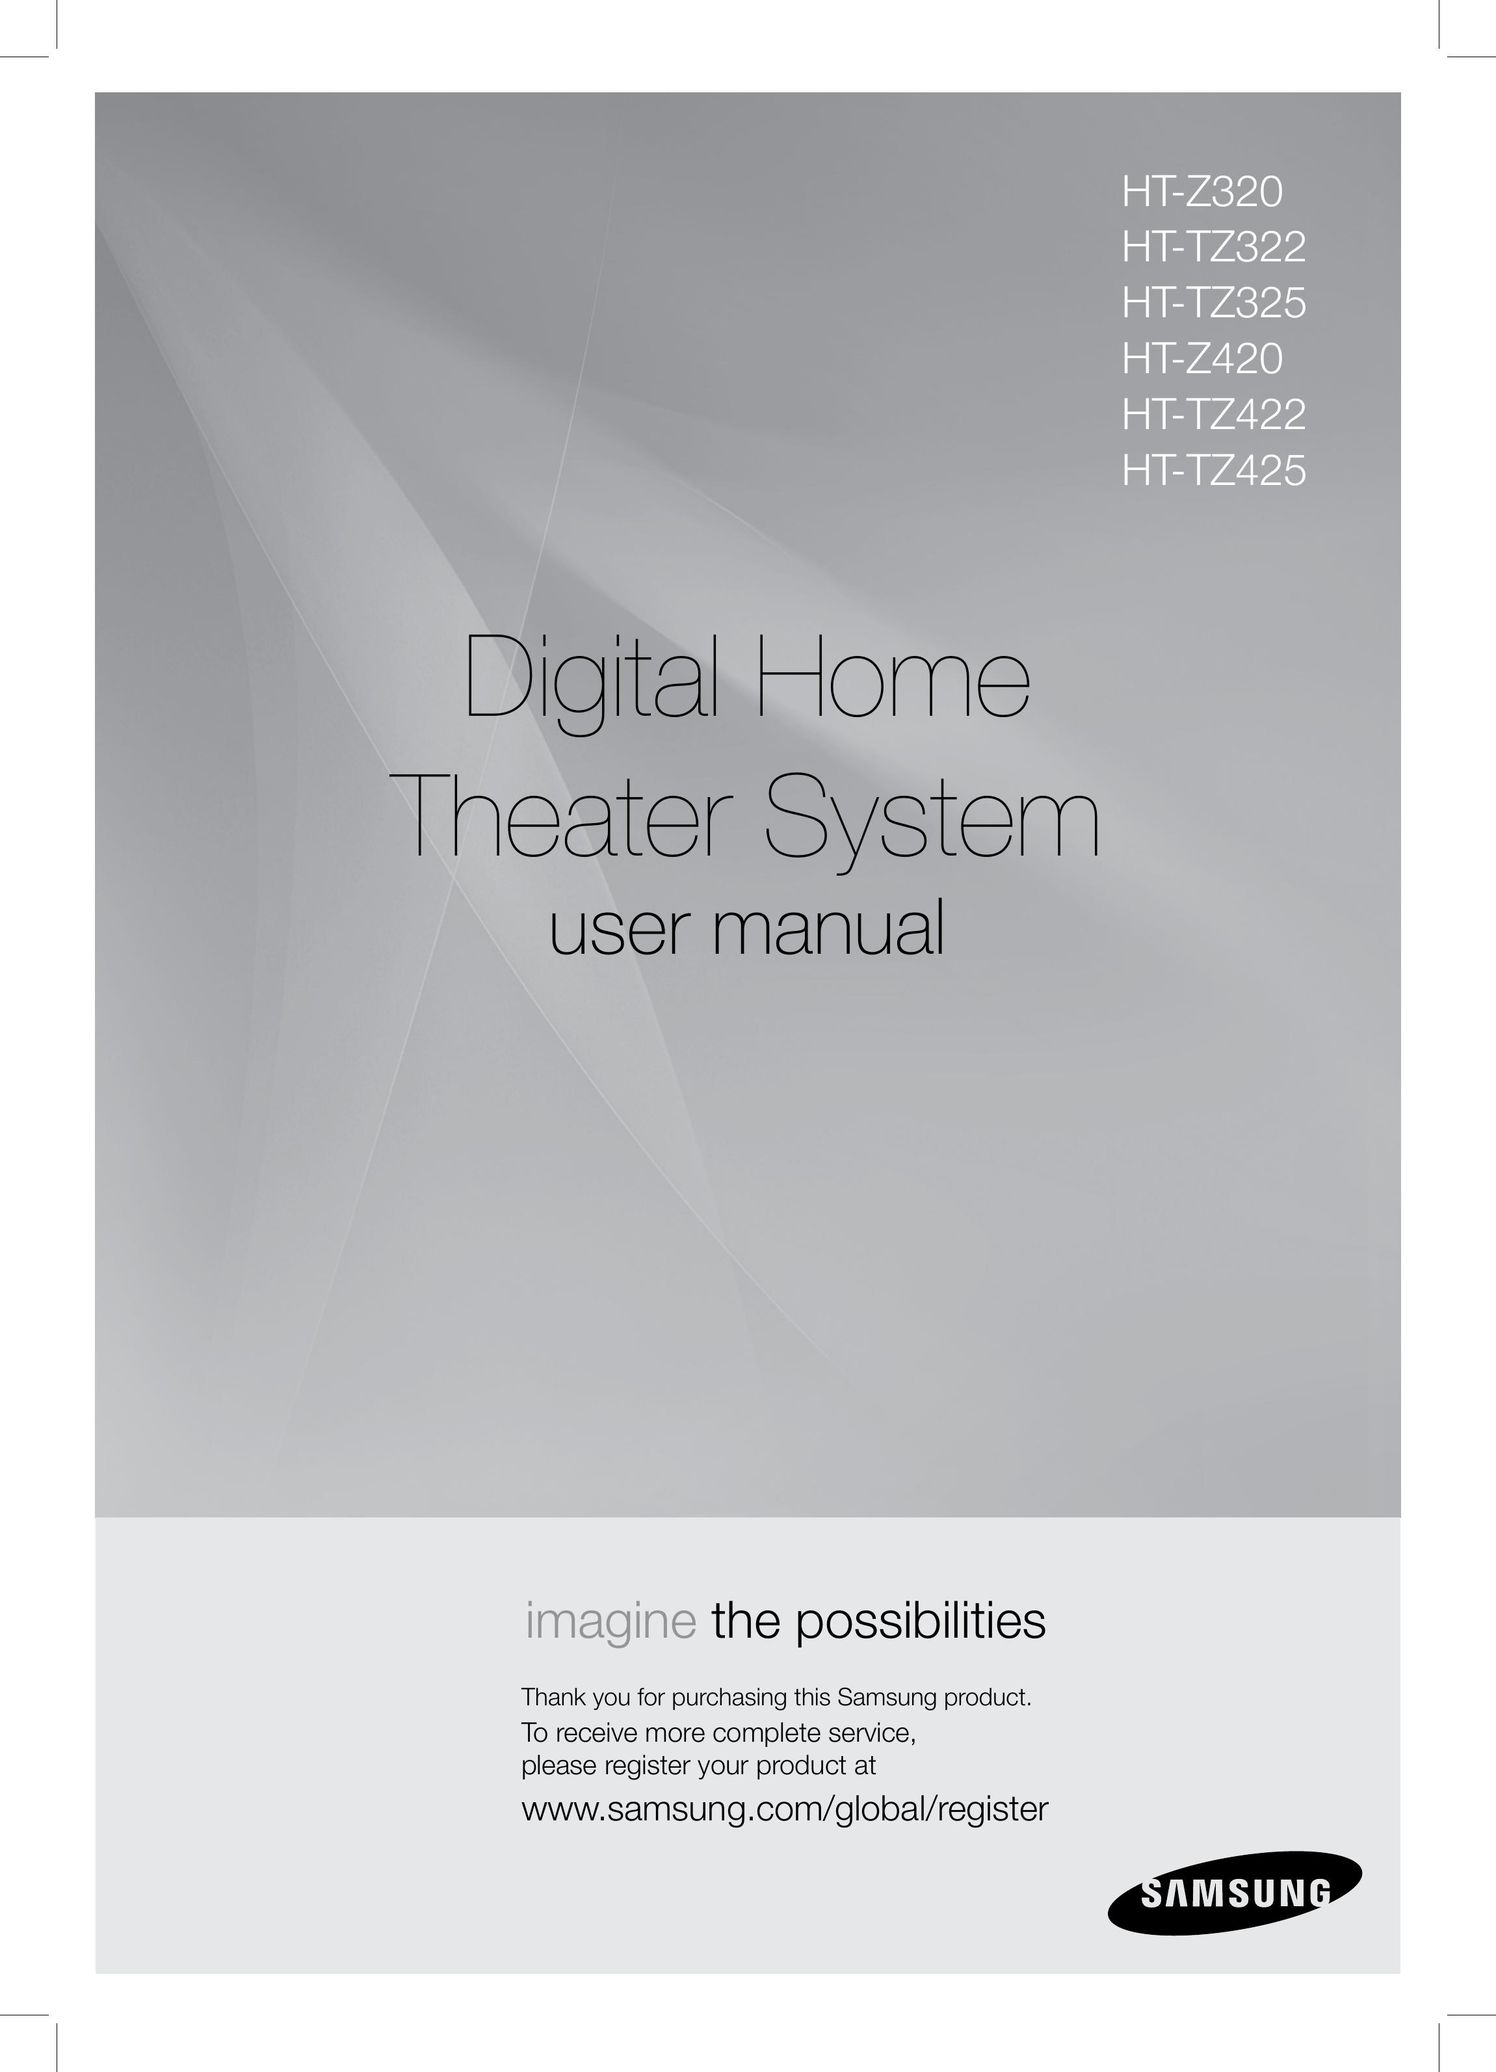 Samsung HT-Z320 Stereo System User Manual